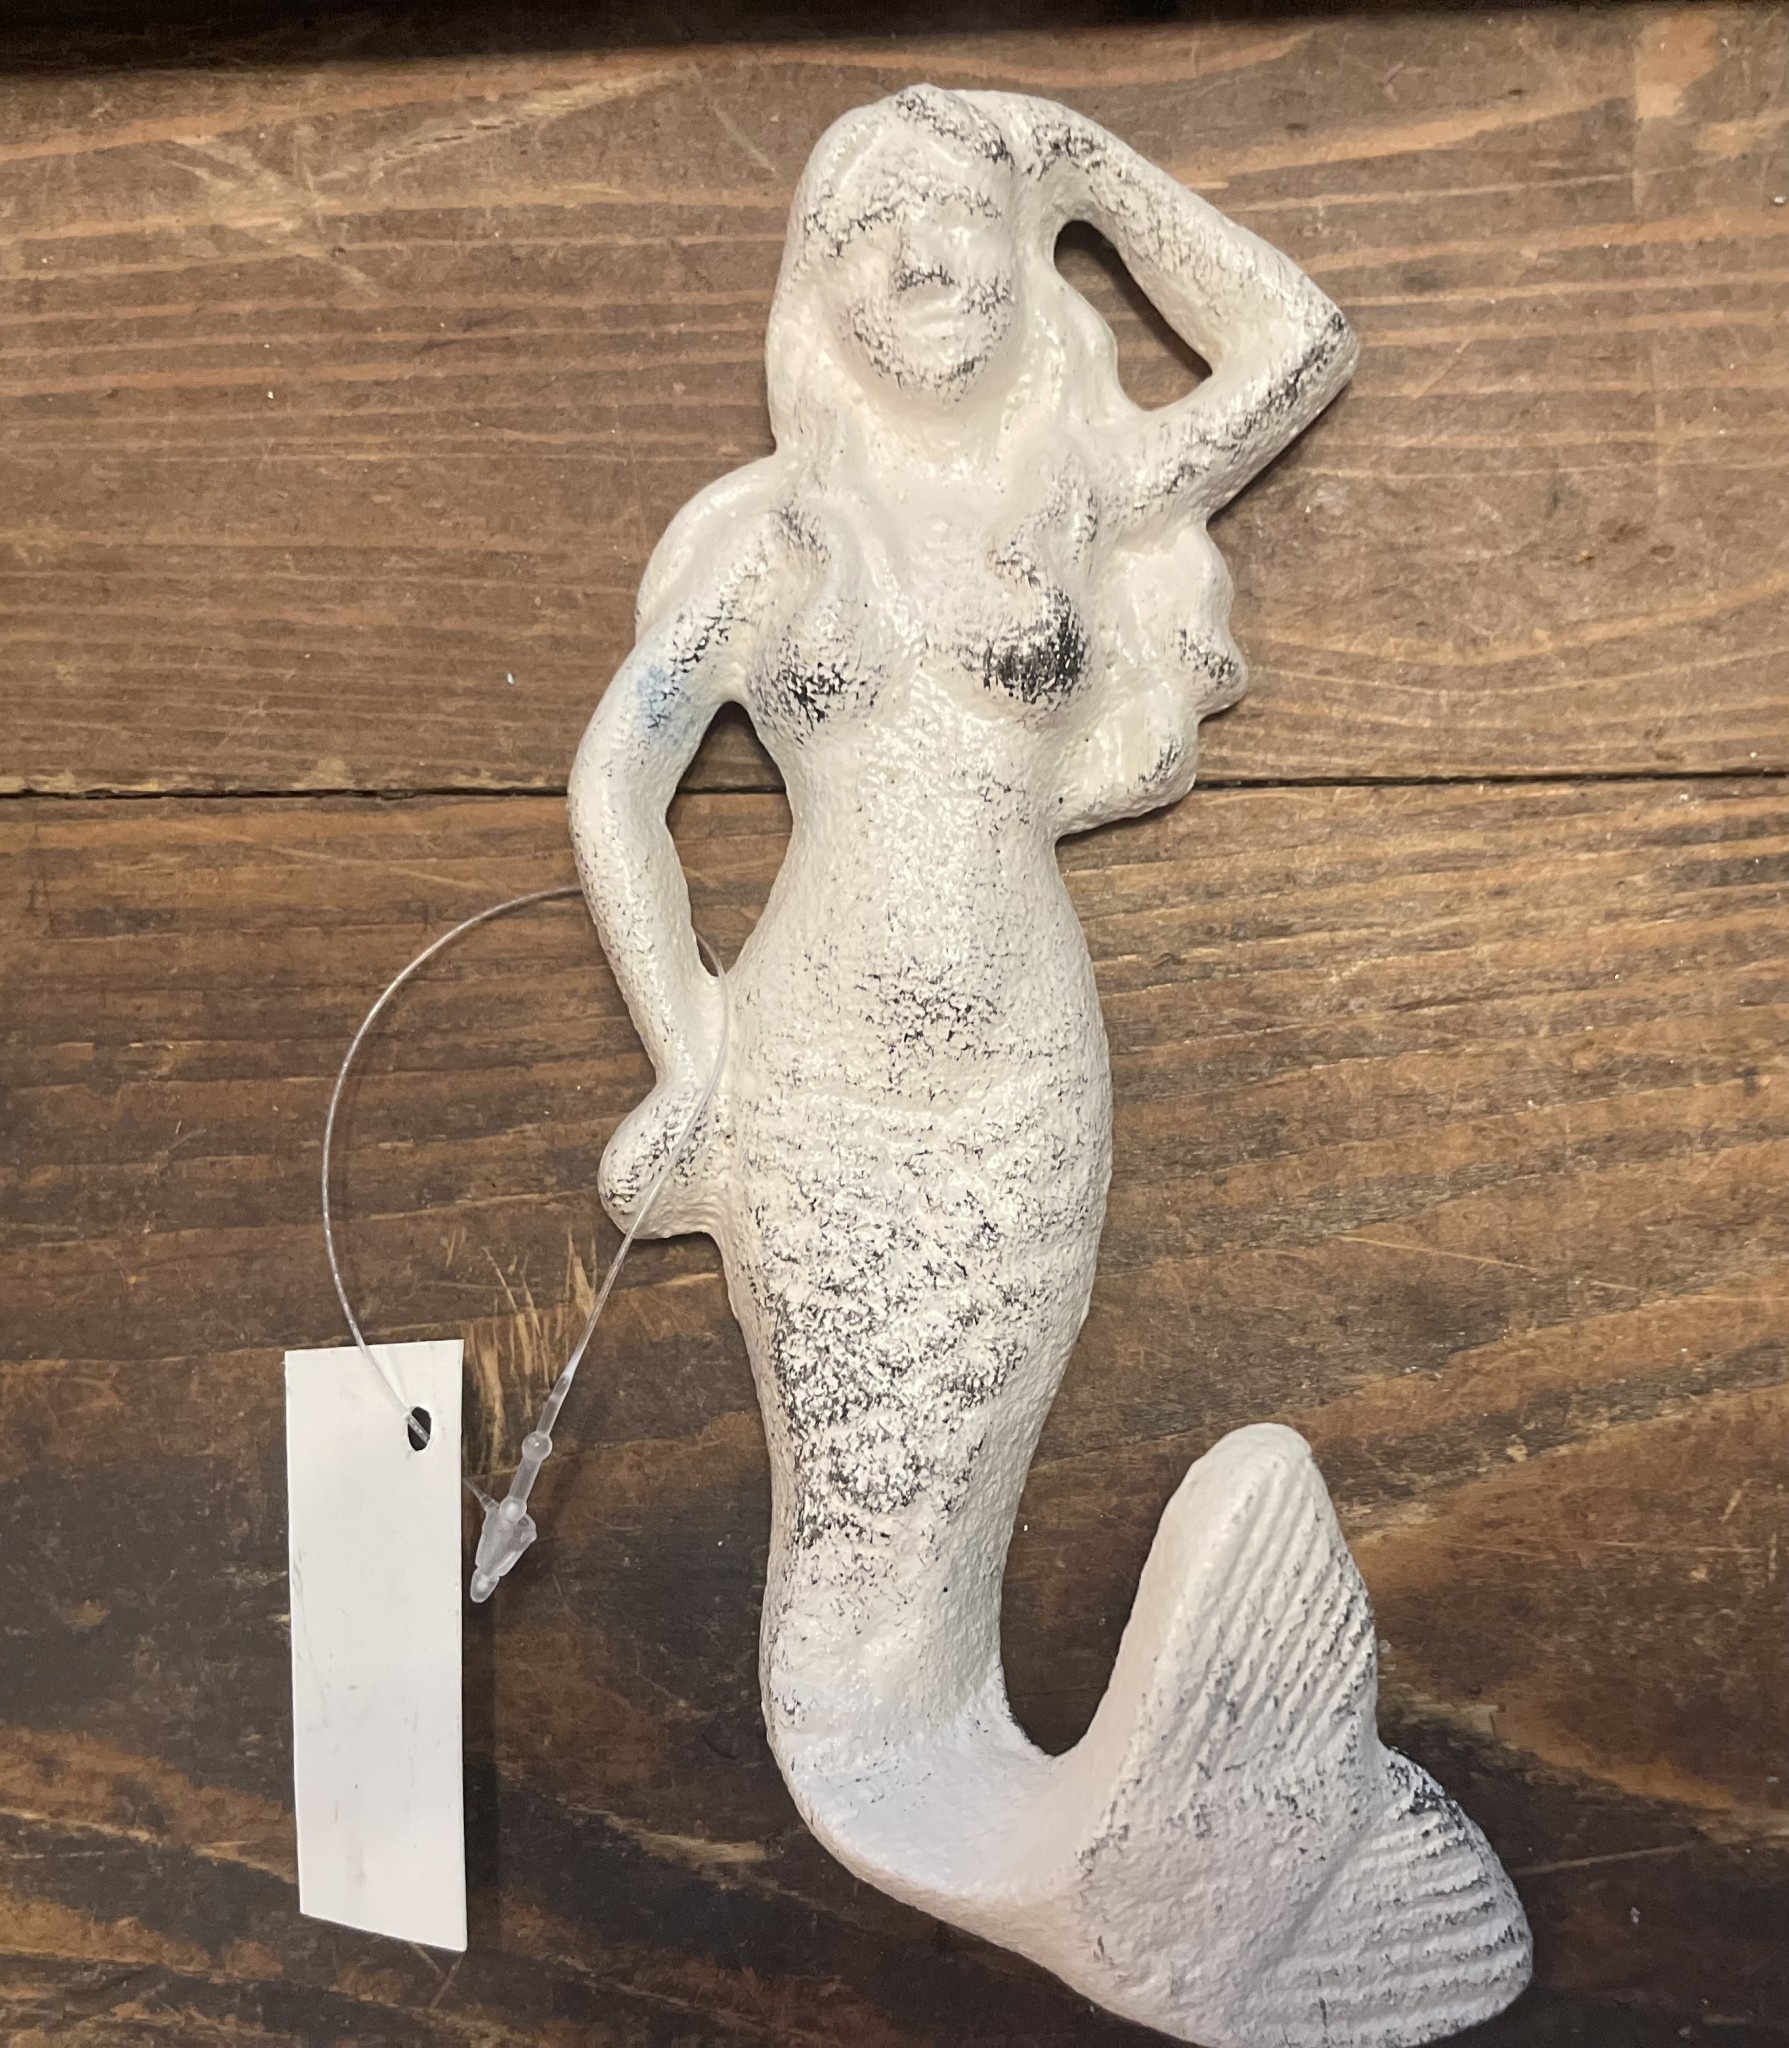 Sungmor Cast Iron Handmade Elegant Mermaid S Hook, Pack of 2, 11.6 Inches,  Ocean Blue, Vintage Style Decorative Metal Hooks